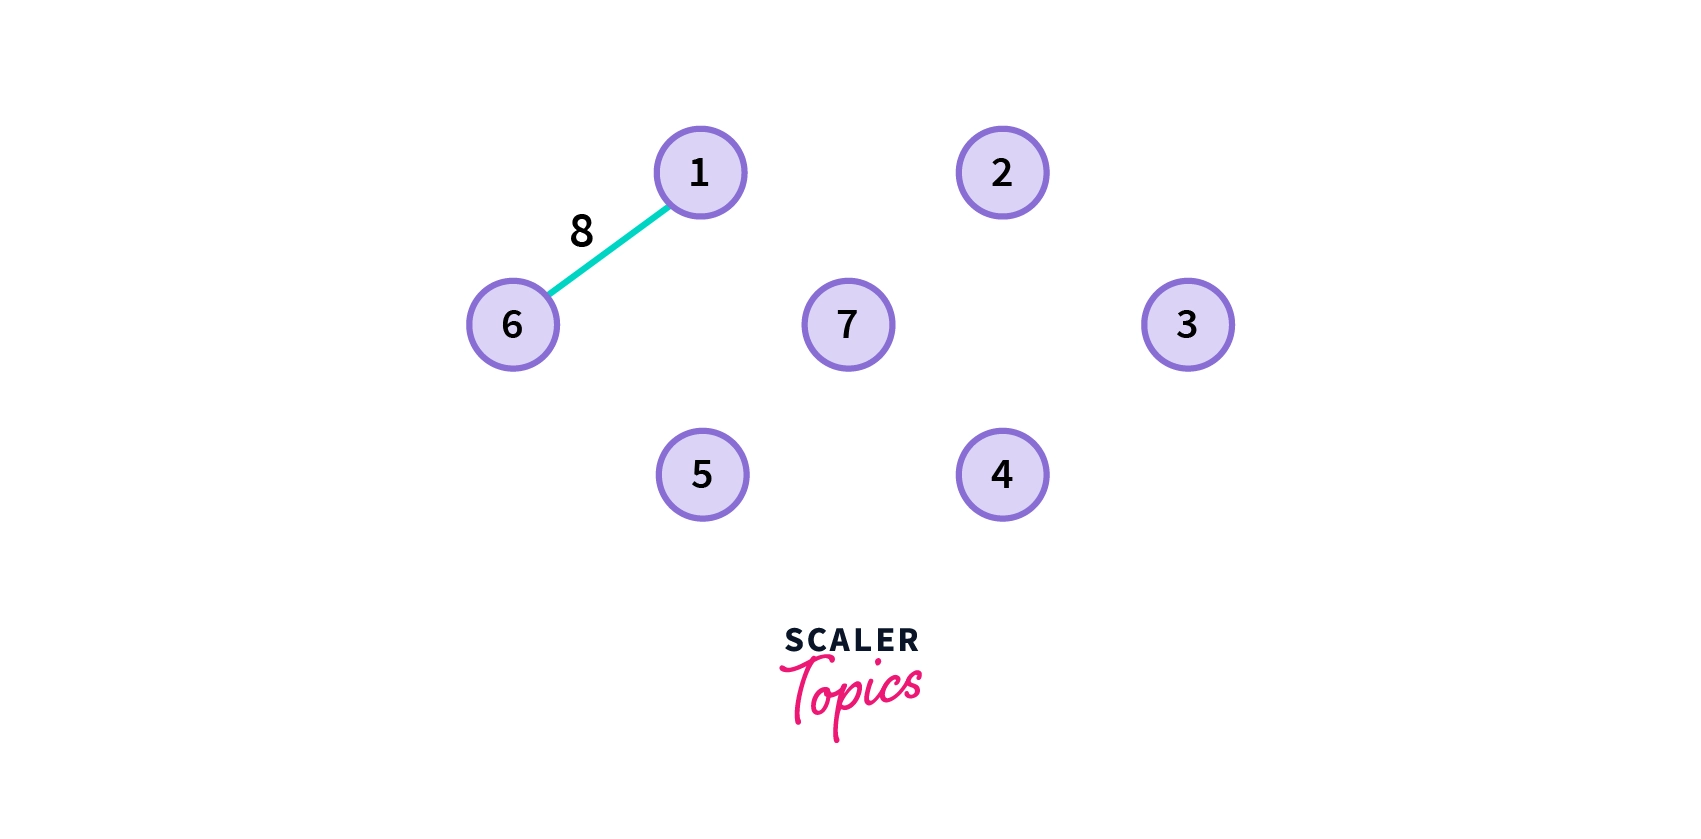 minimum spanning tree using Kruskal's Algorithm